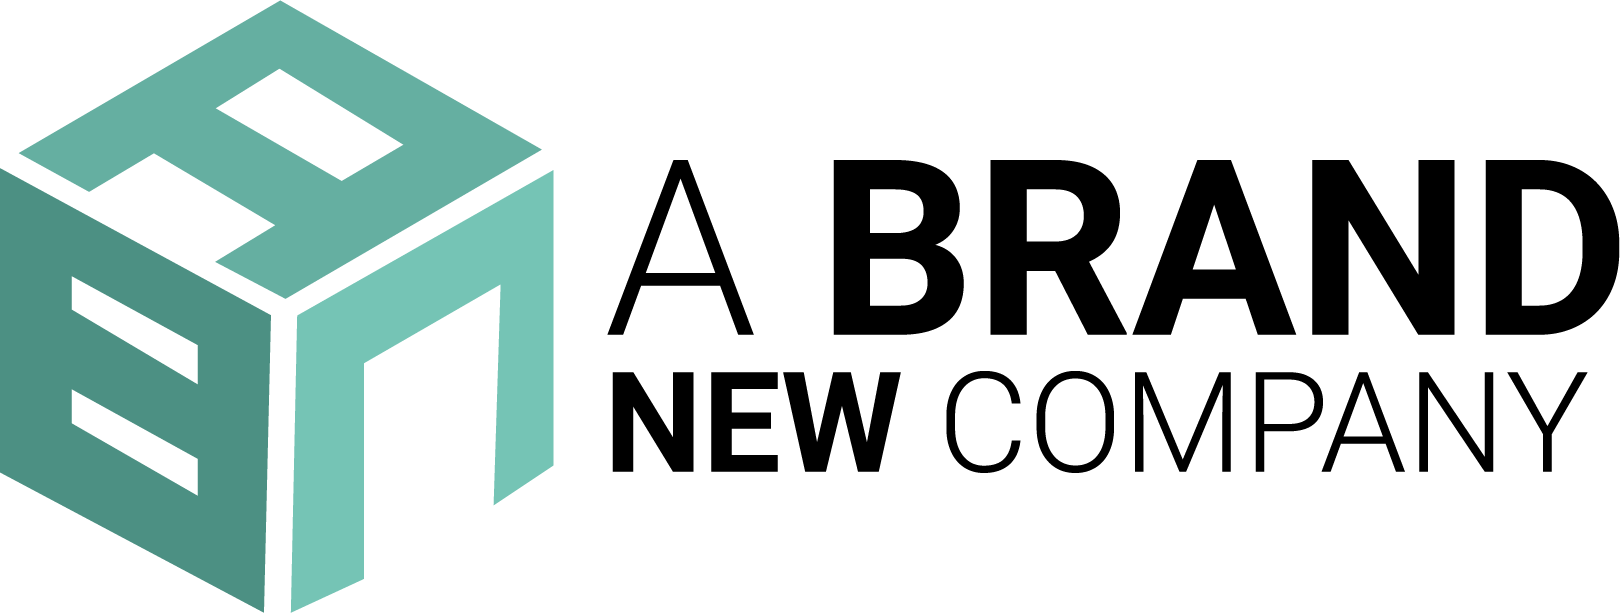 A Brand New Company logo